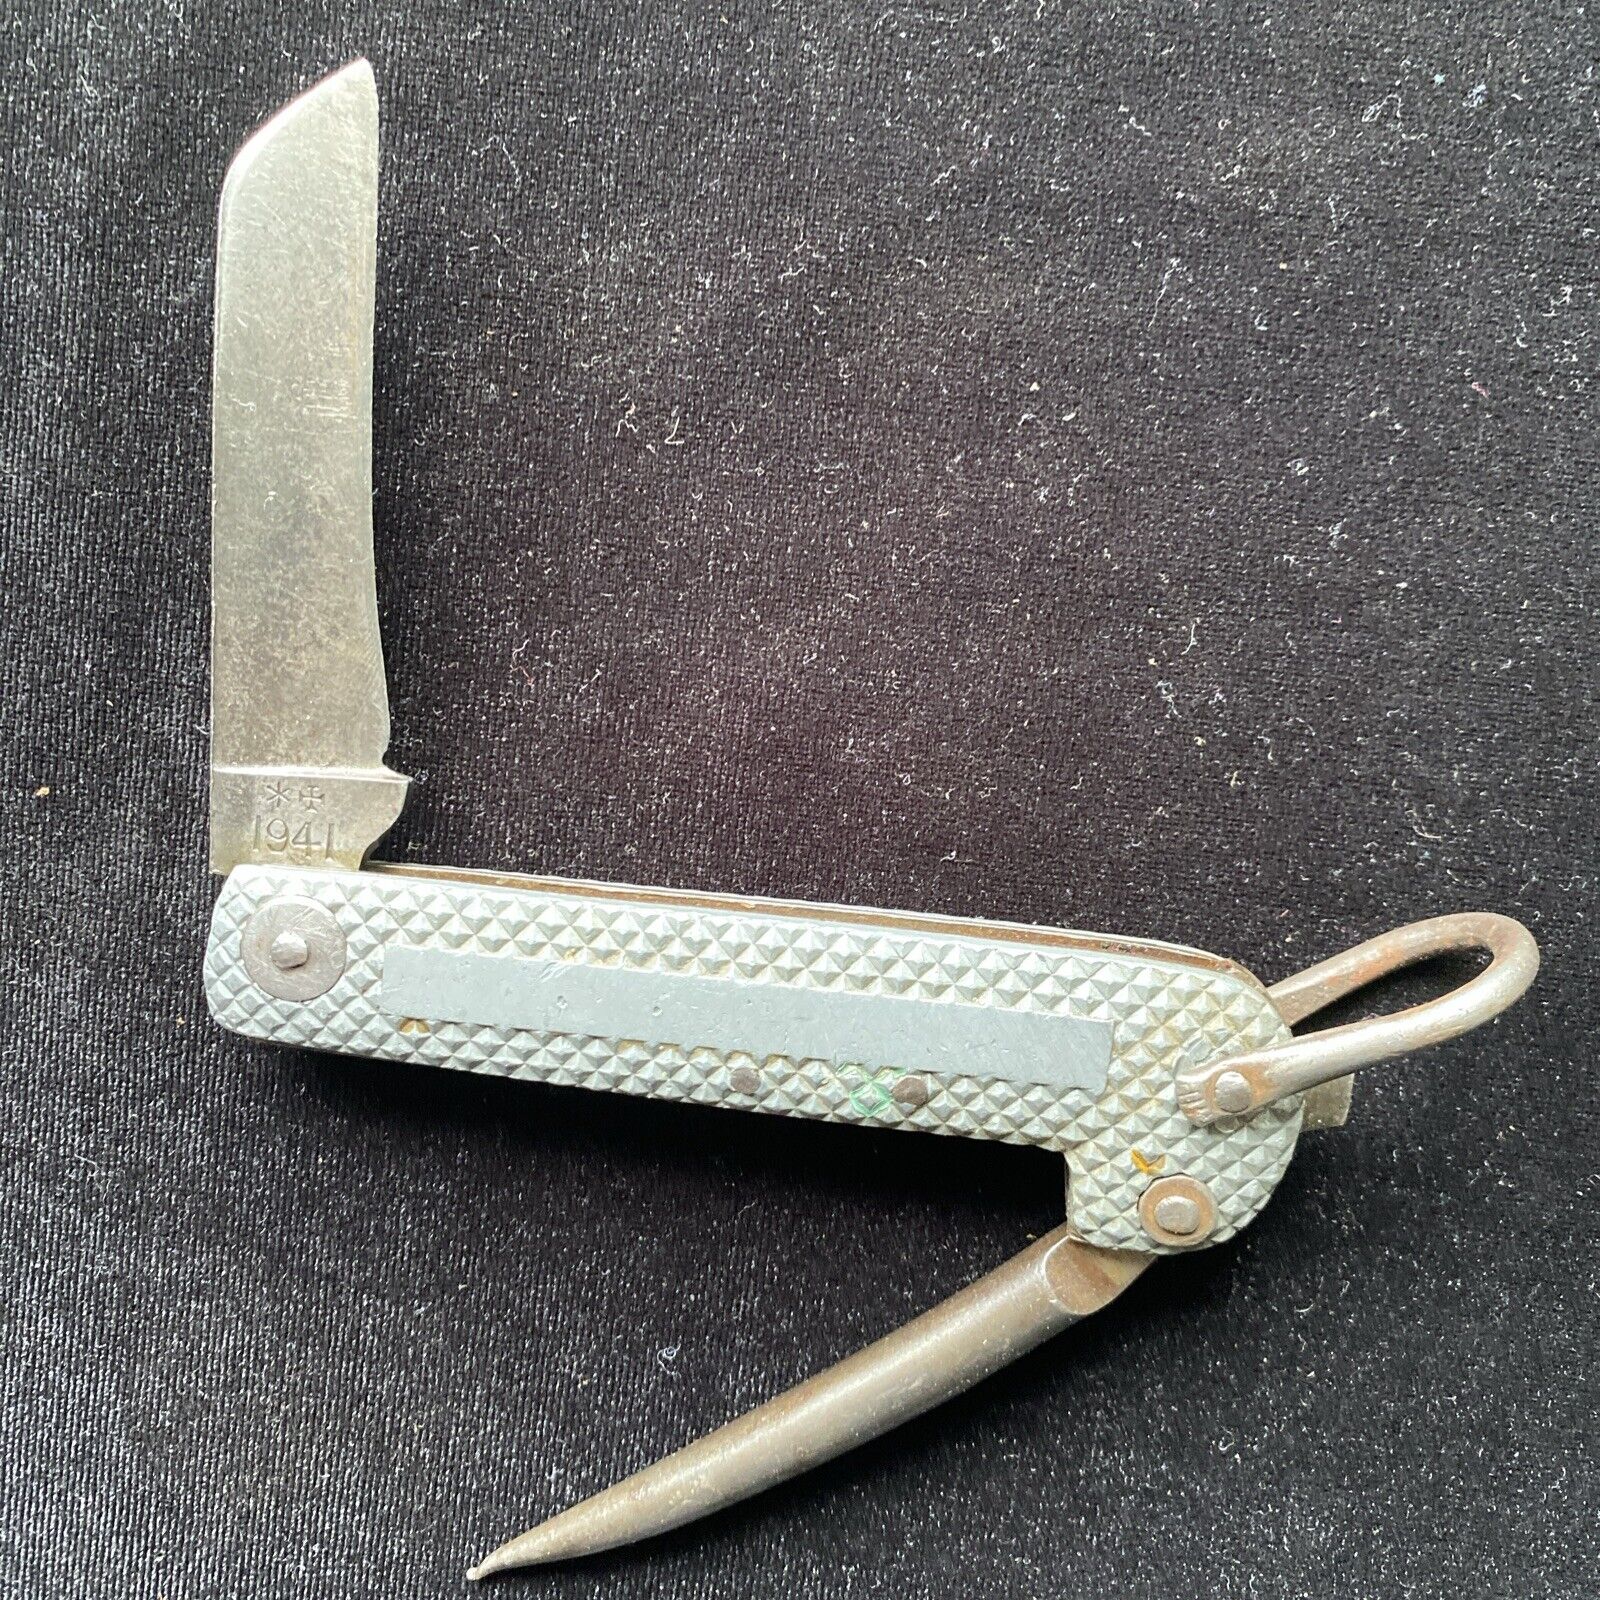 WW2 Sheffield Navy Rigging Marlin Spike KNIFE Sailor Folding Knife 1941 British